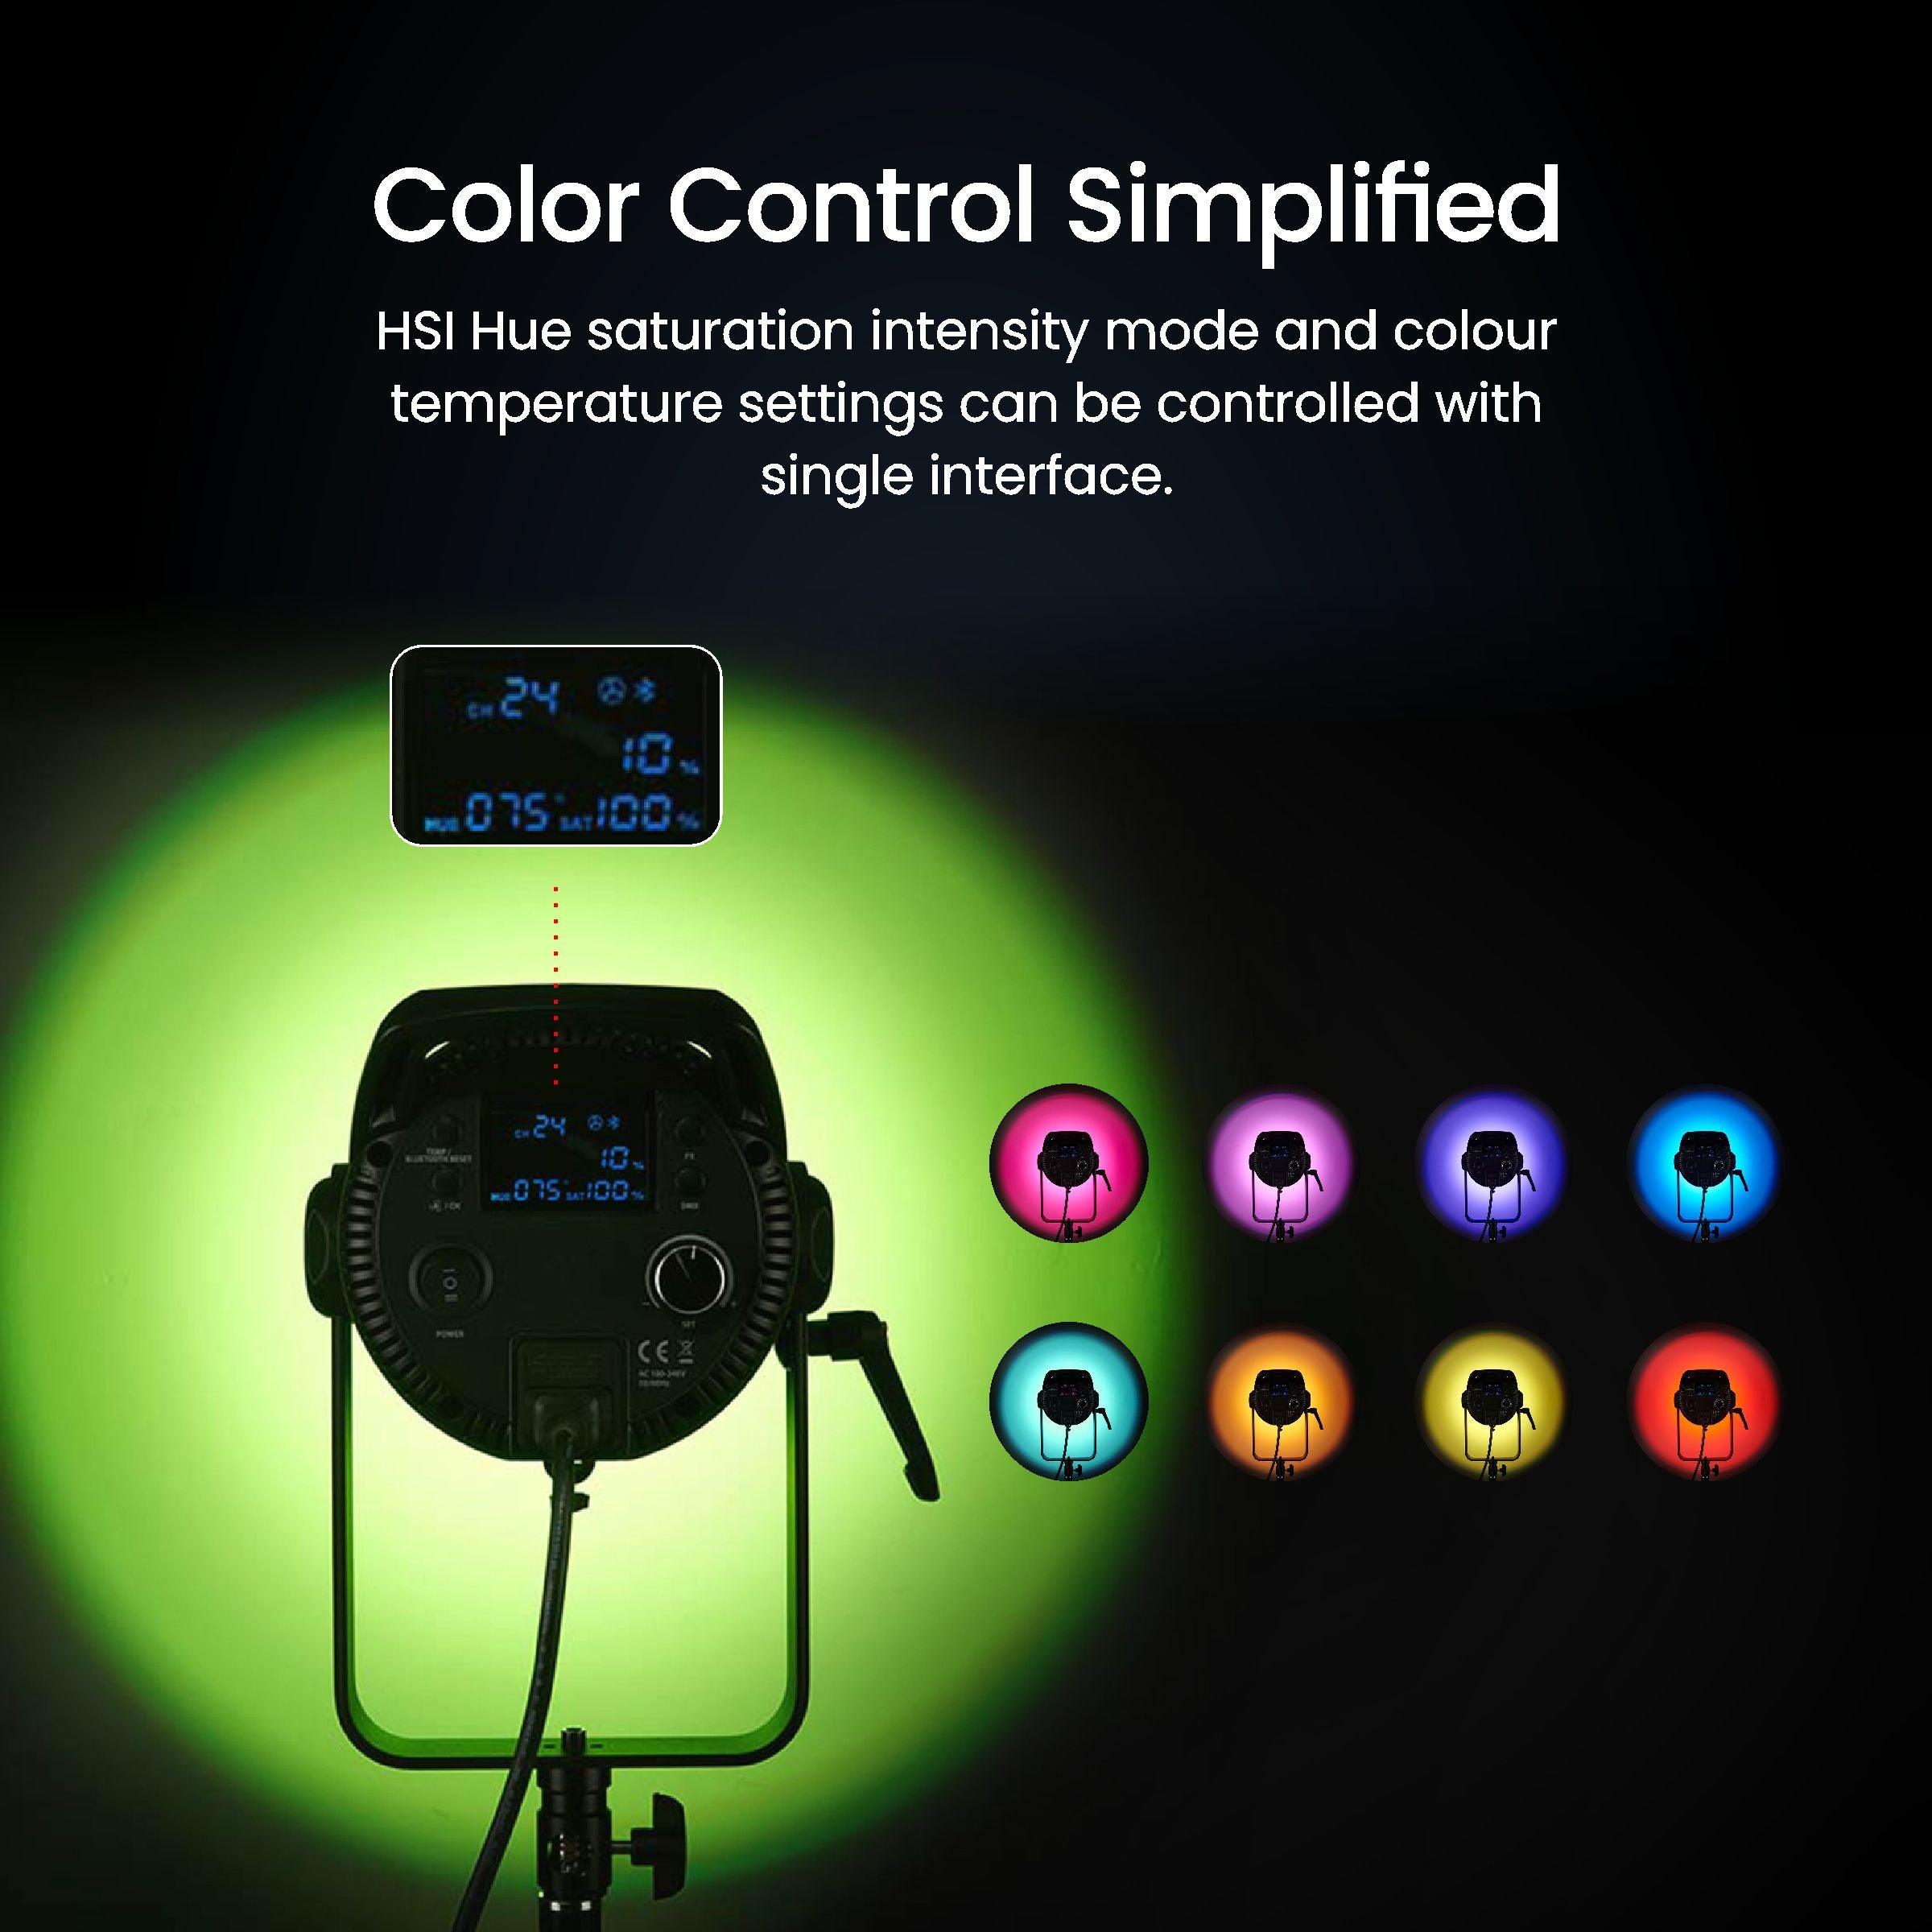 Buy Digitek DCL-200 W RGB Combo Continuous LED Light with 18 CM